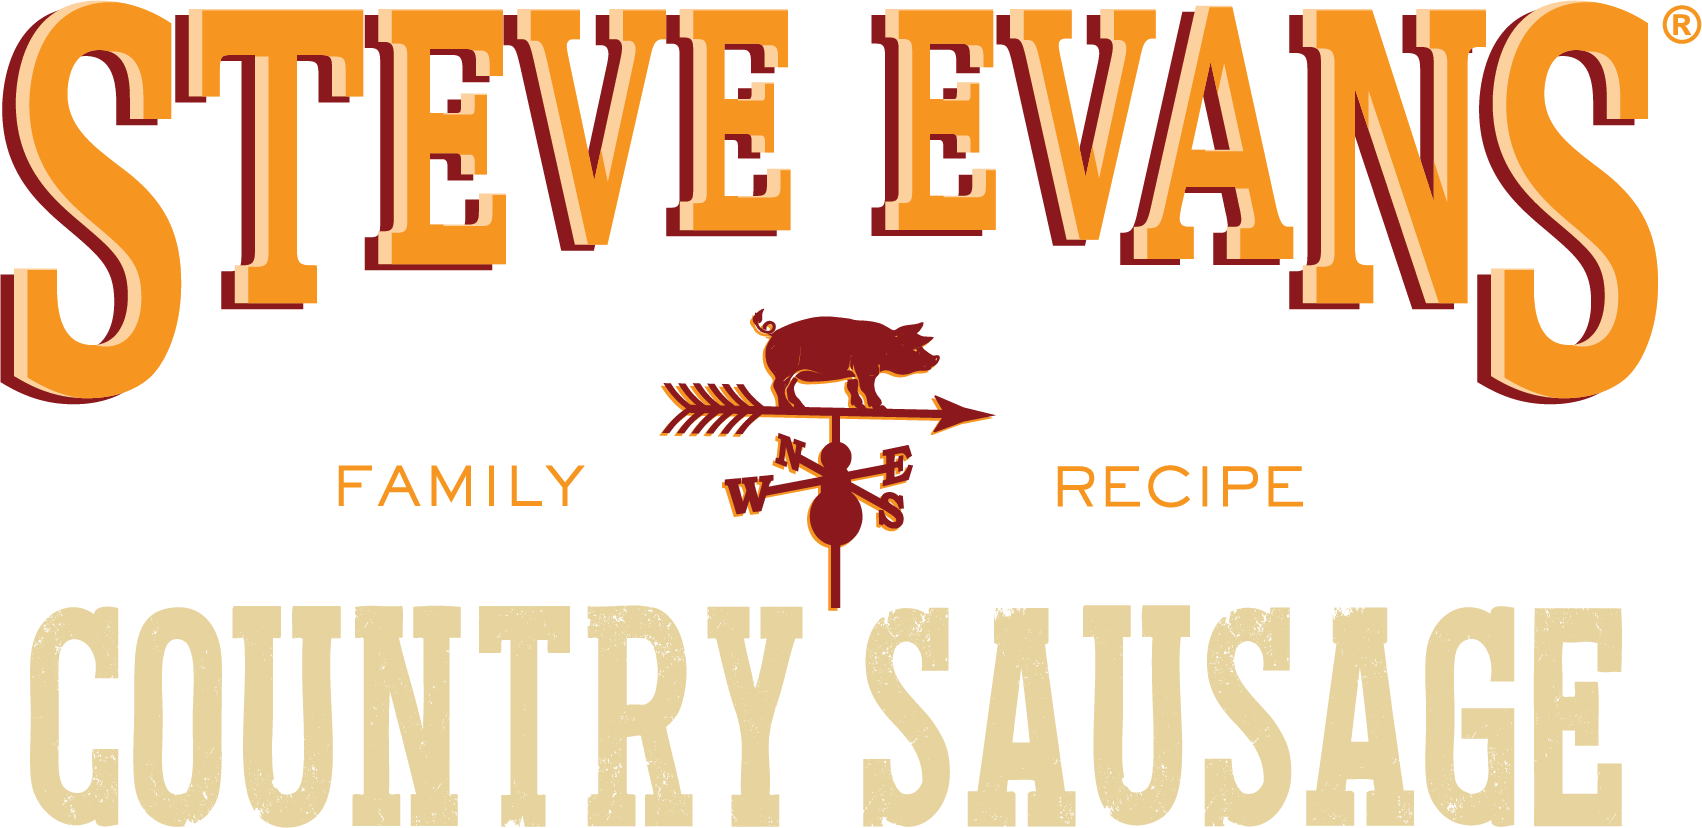 Steve Evans Sausage